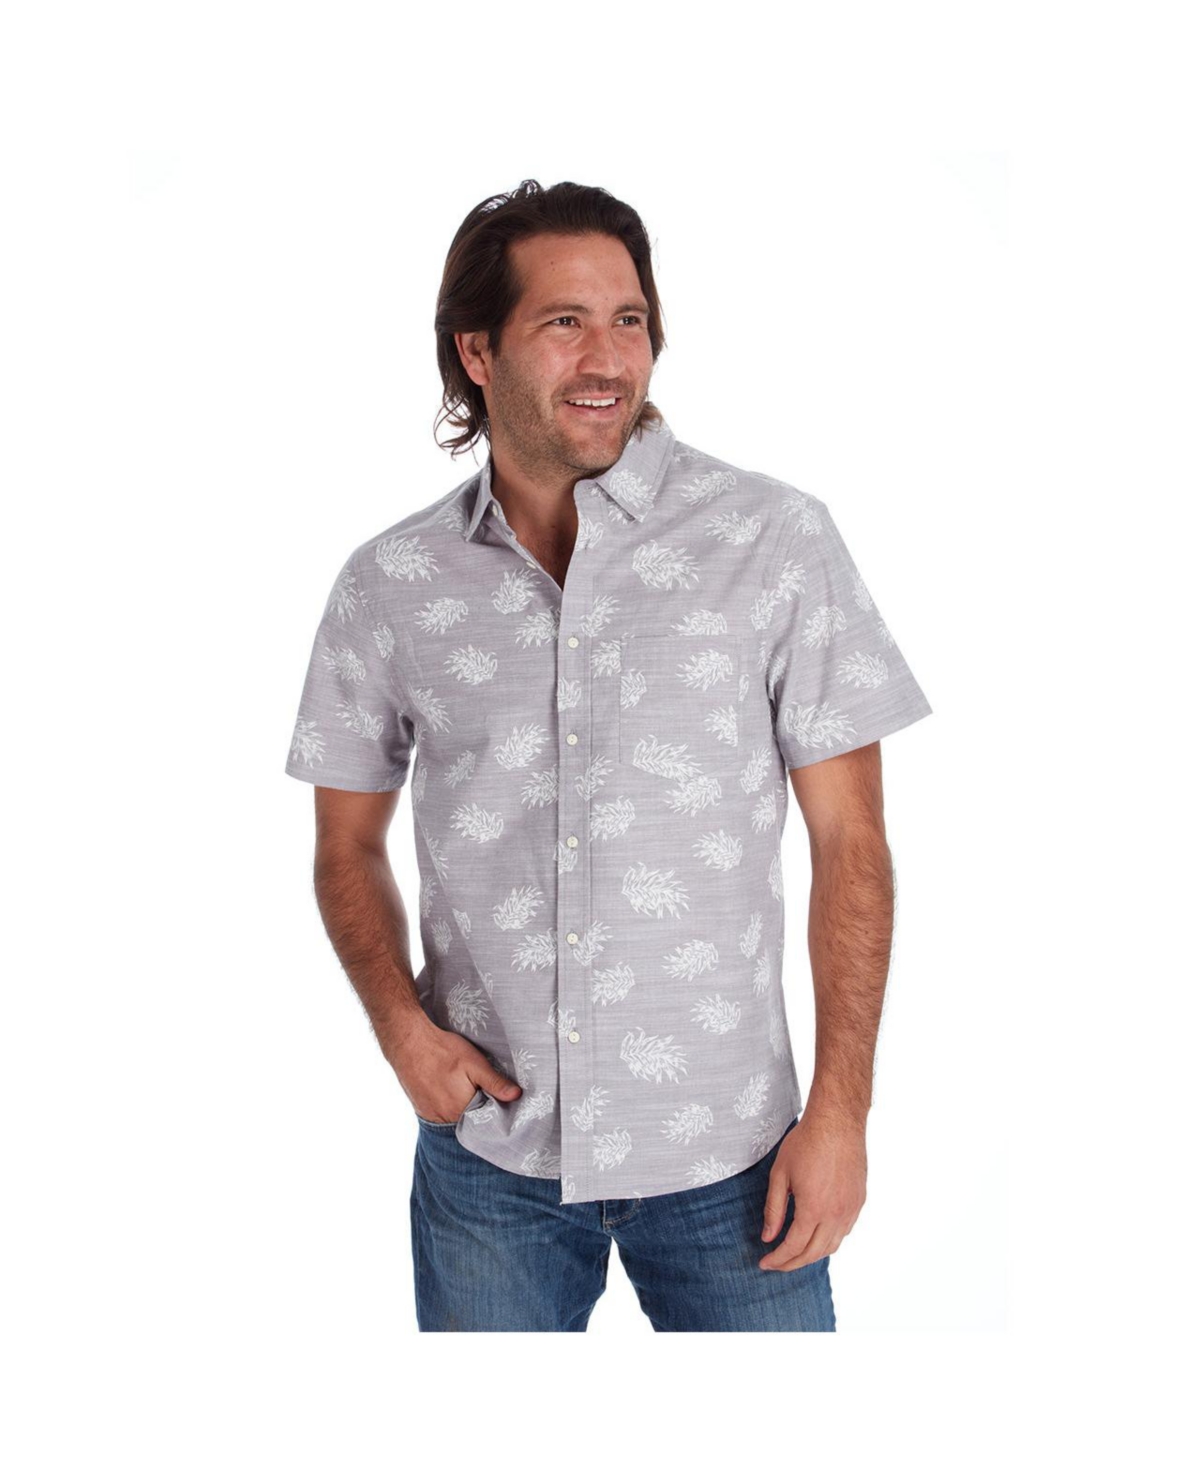 Clothing Men's Short Sleeve Leaf Print Shirt - Armor grey